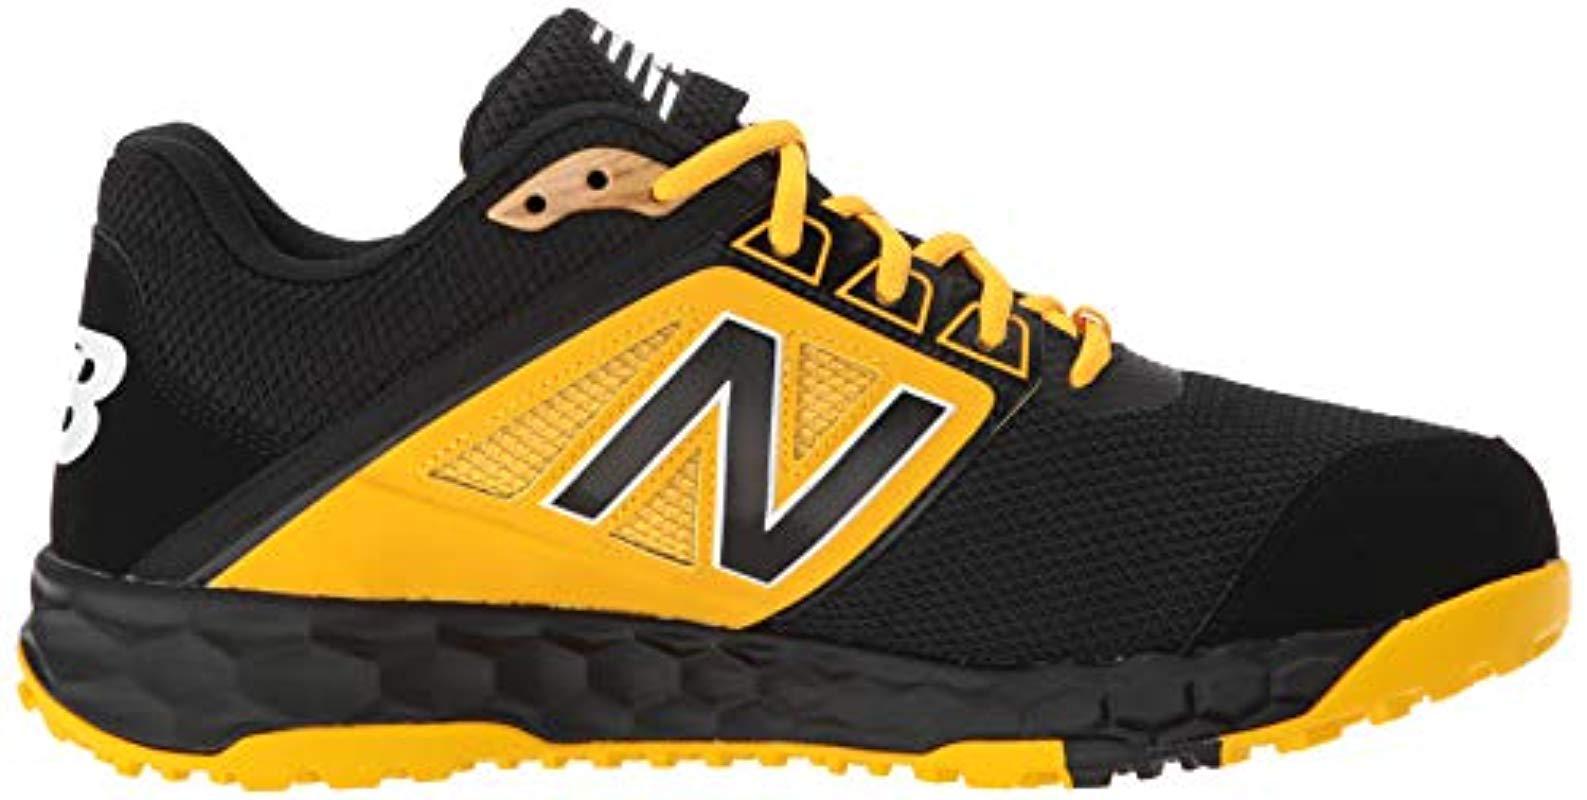 New Balance Rubber 3000v4 Turf Baseball Shoe in Black/Yellow (Yellow ...